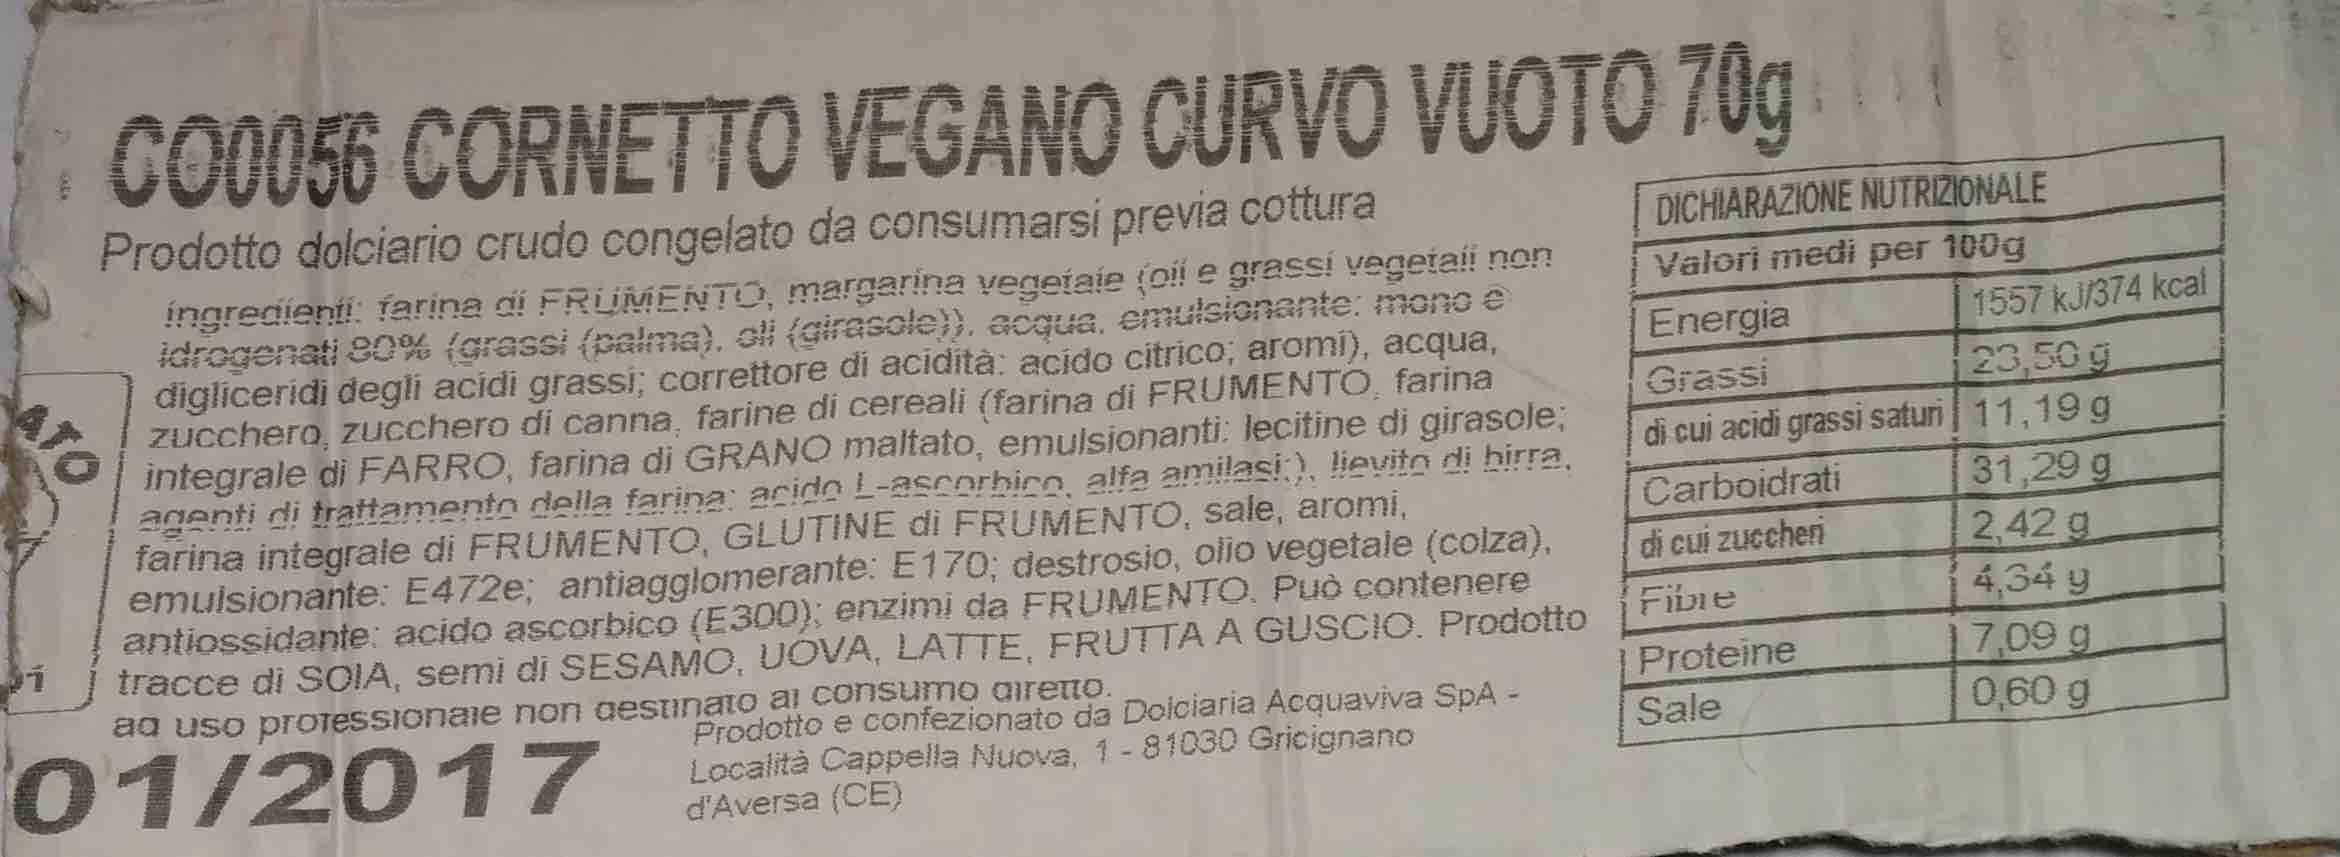 ingredienti cornetto San Vito